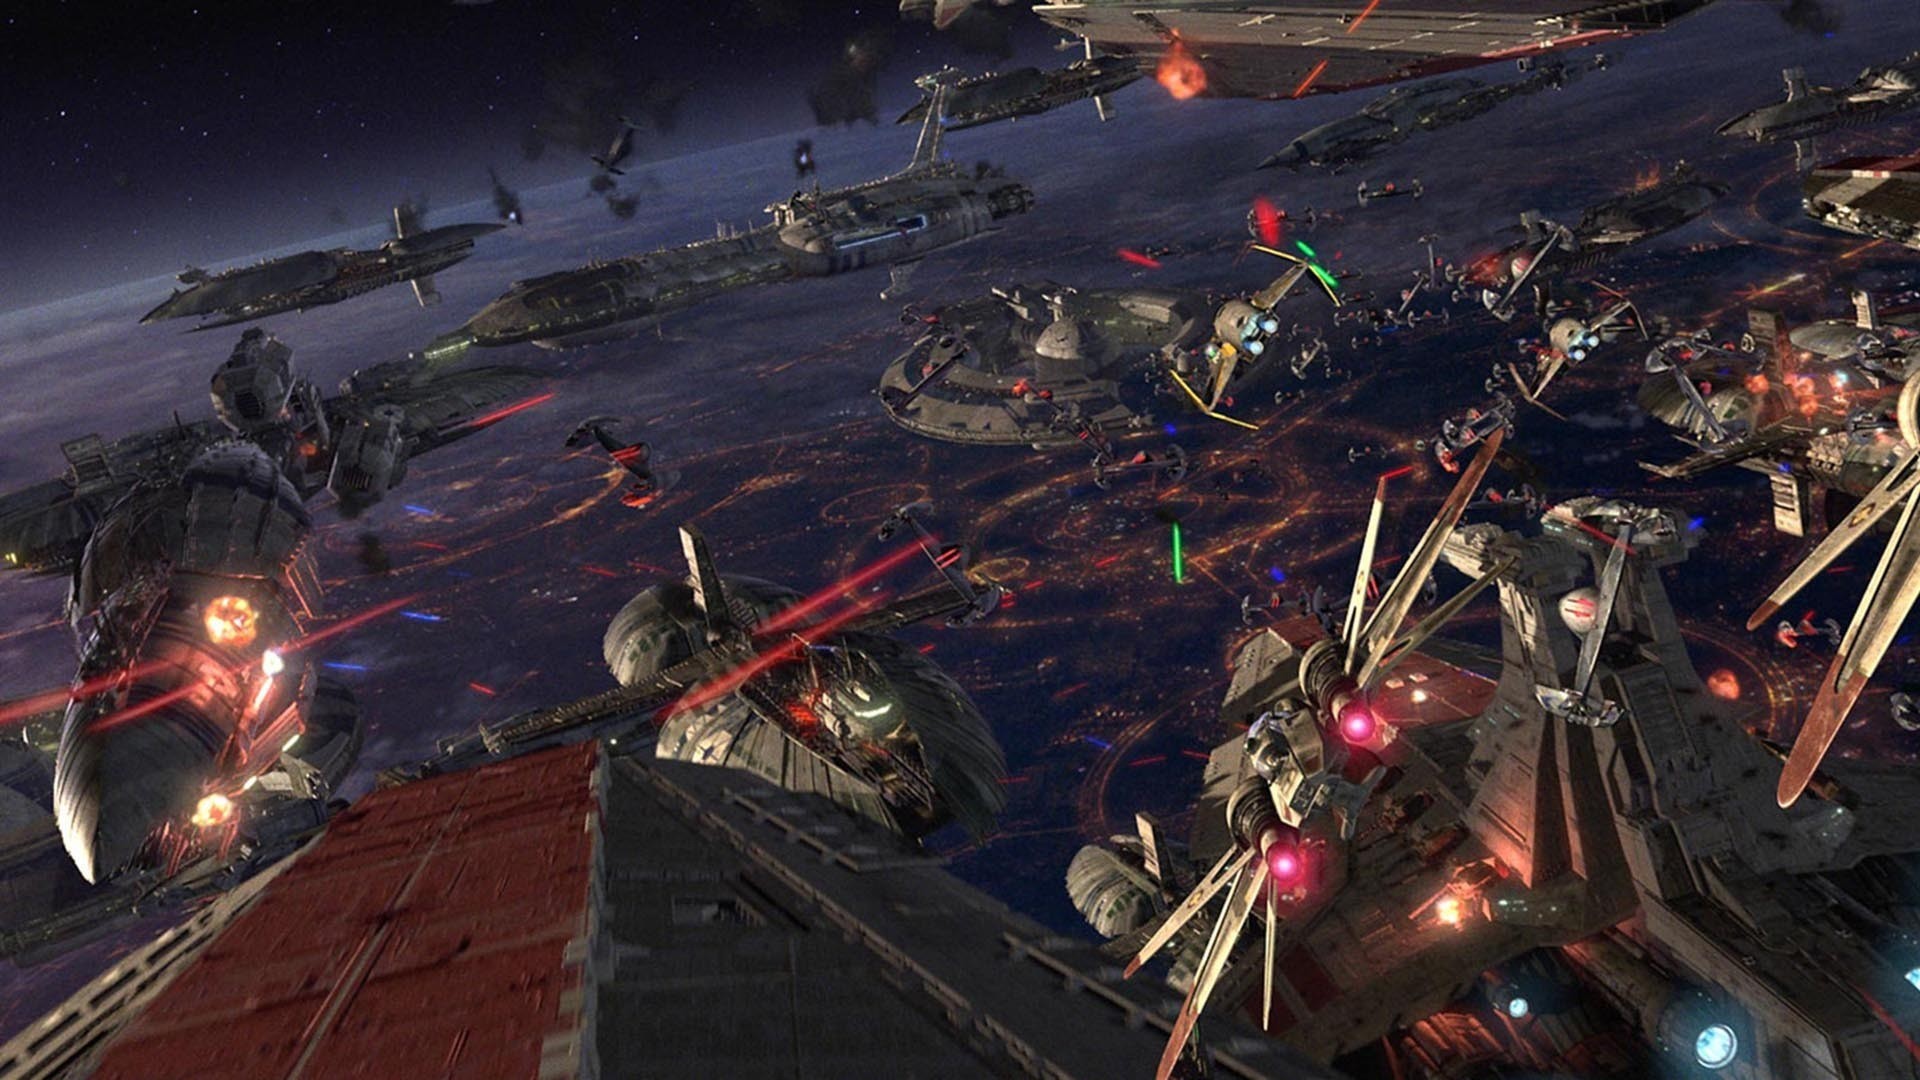 1920x1080 Star Wars Episode III Revenge of the Sith sci-fi battle spaceship .